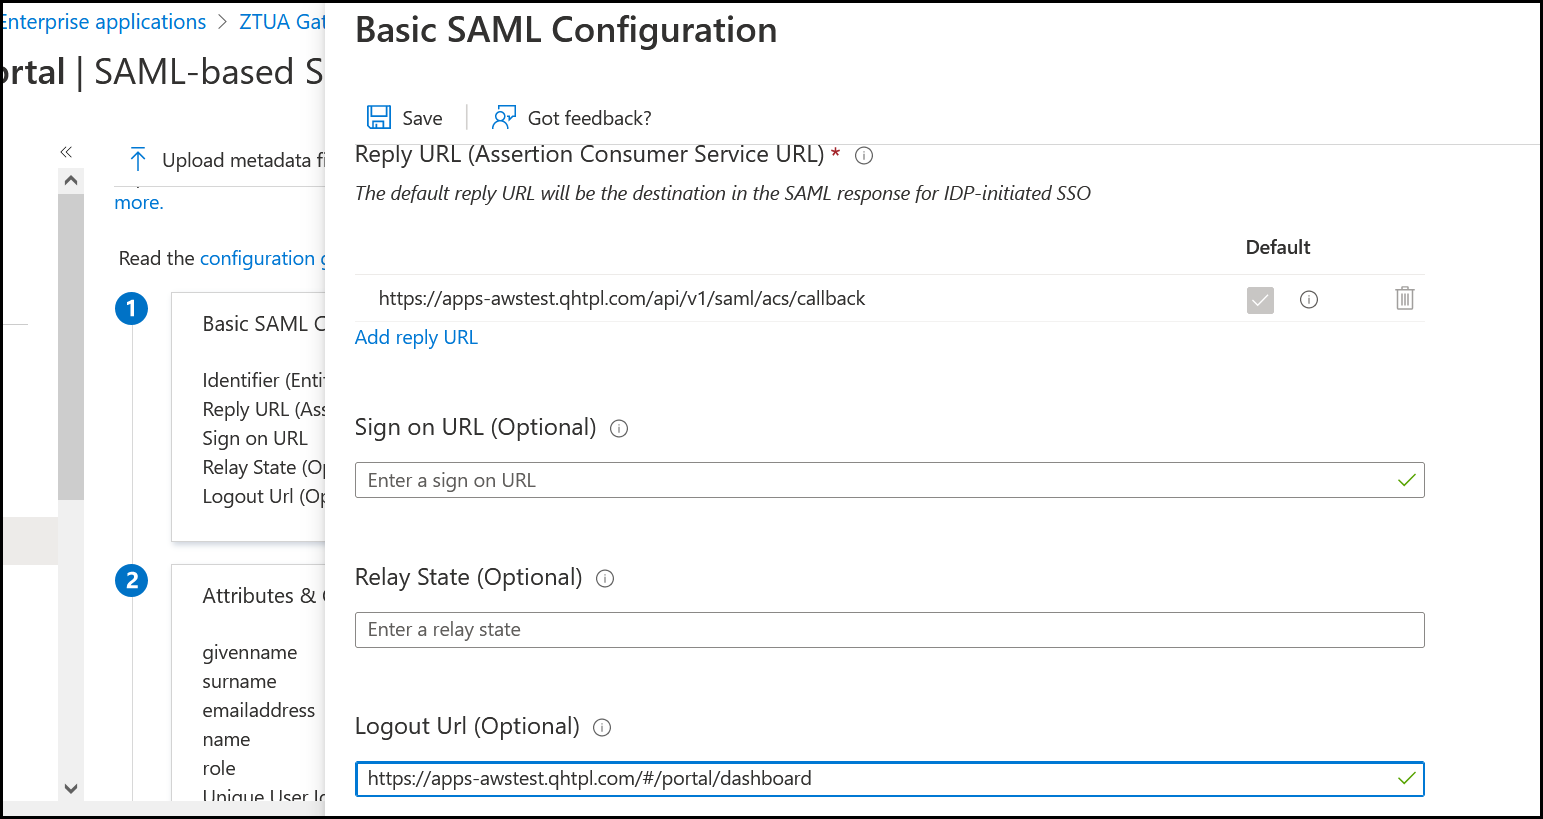 Basic SAML configuration attributes